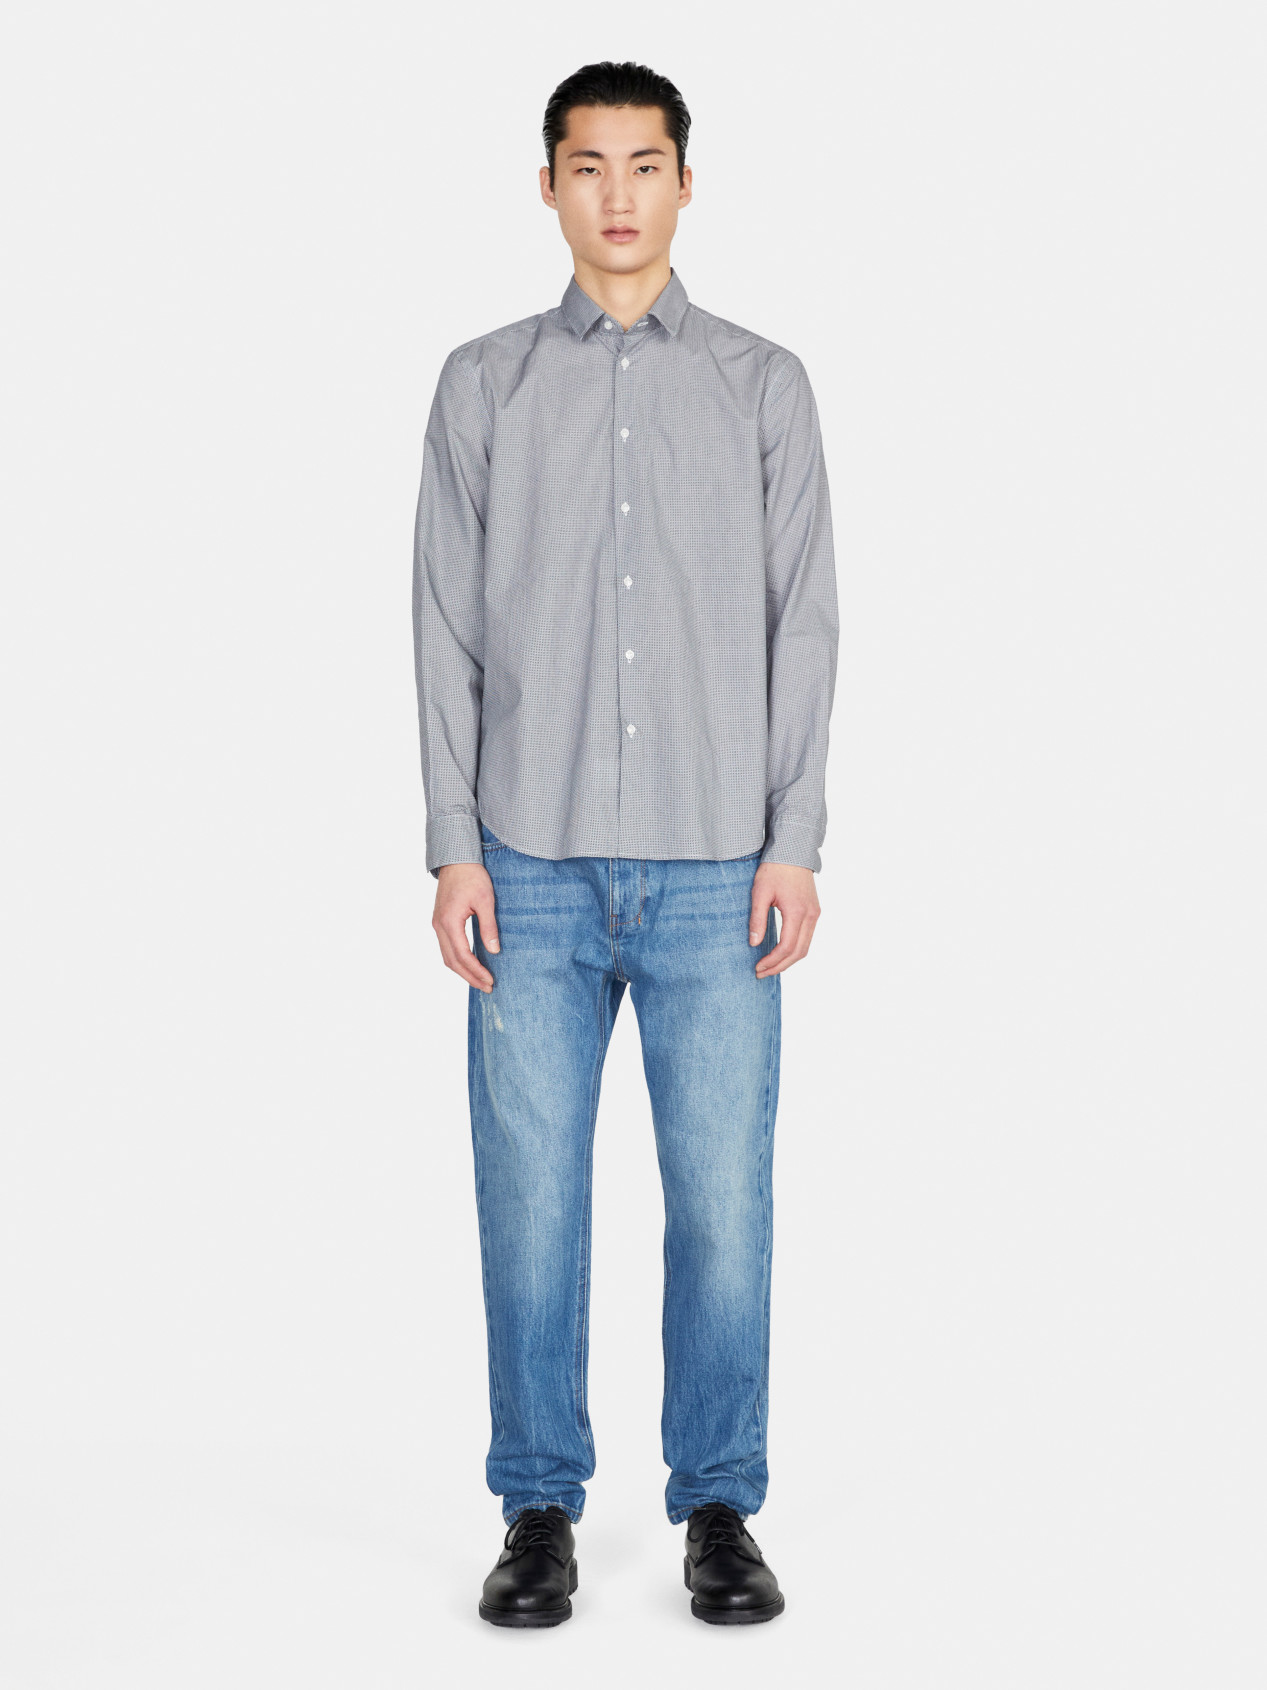 Sisley - Printed Shirt, Man, Light Gray, Size: L